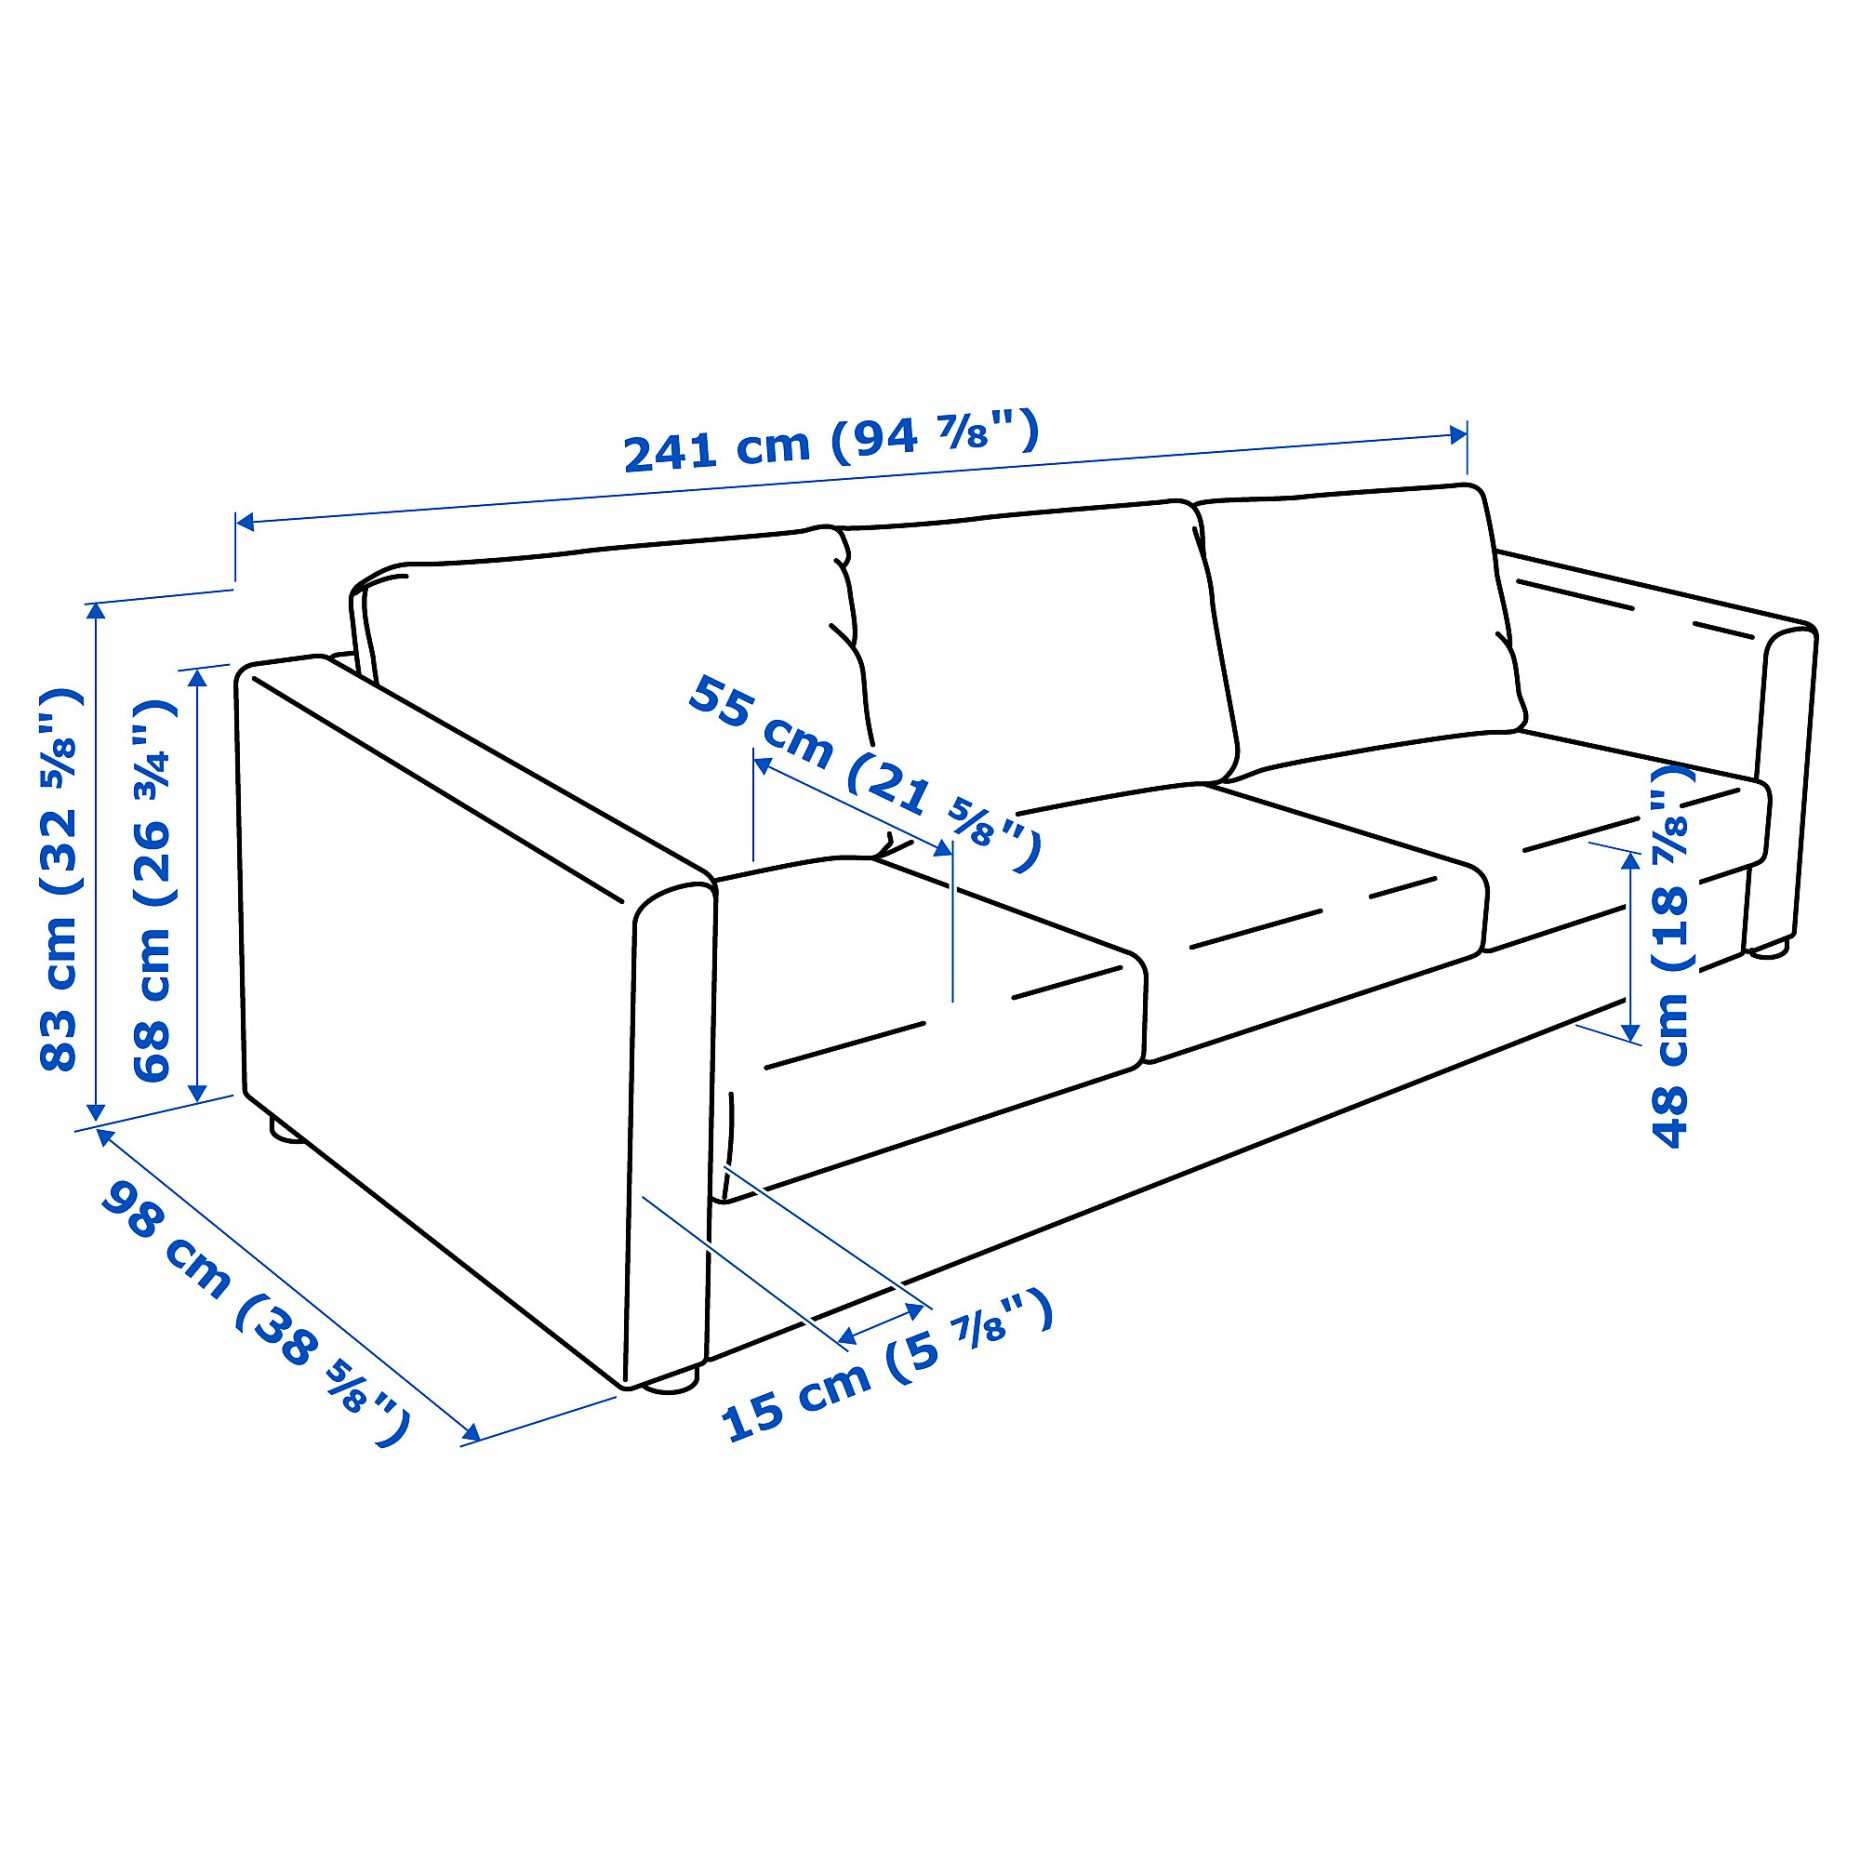 VIMLE, 3-seat sofa, 793.990.30